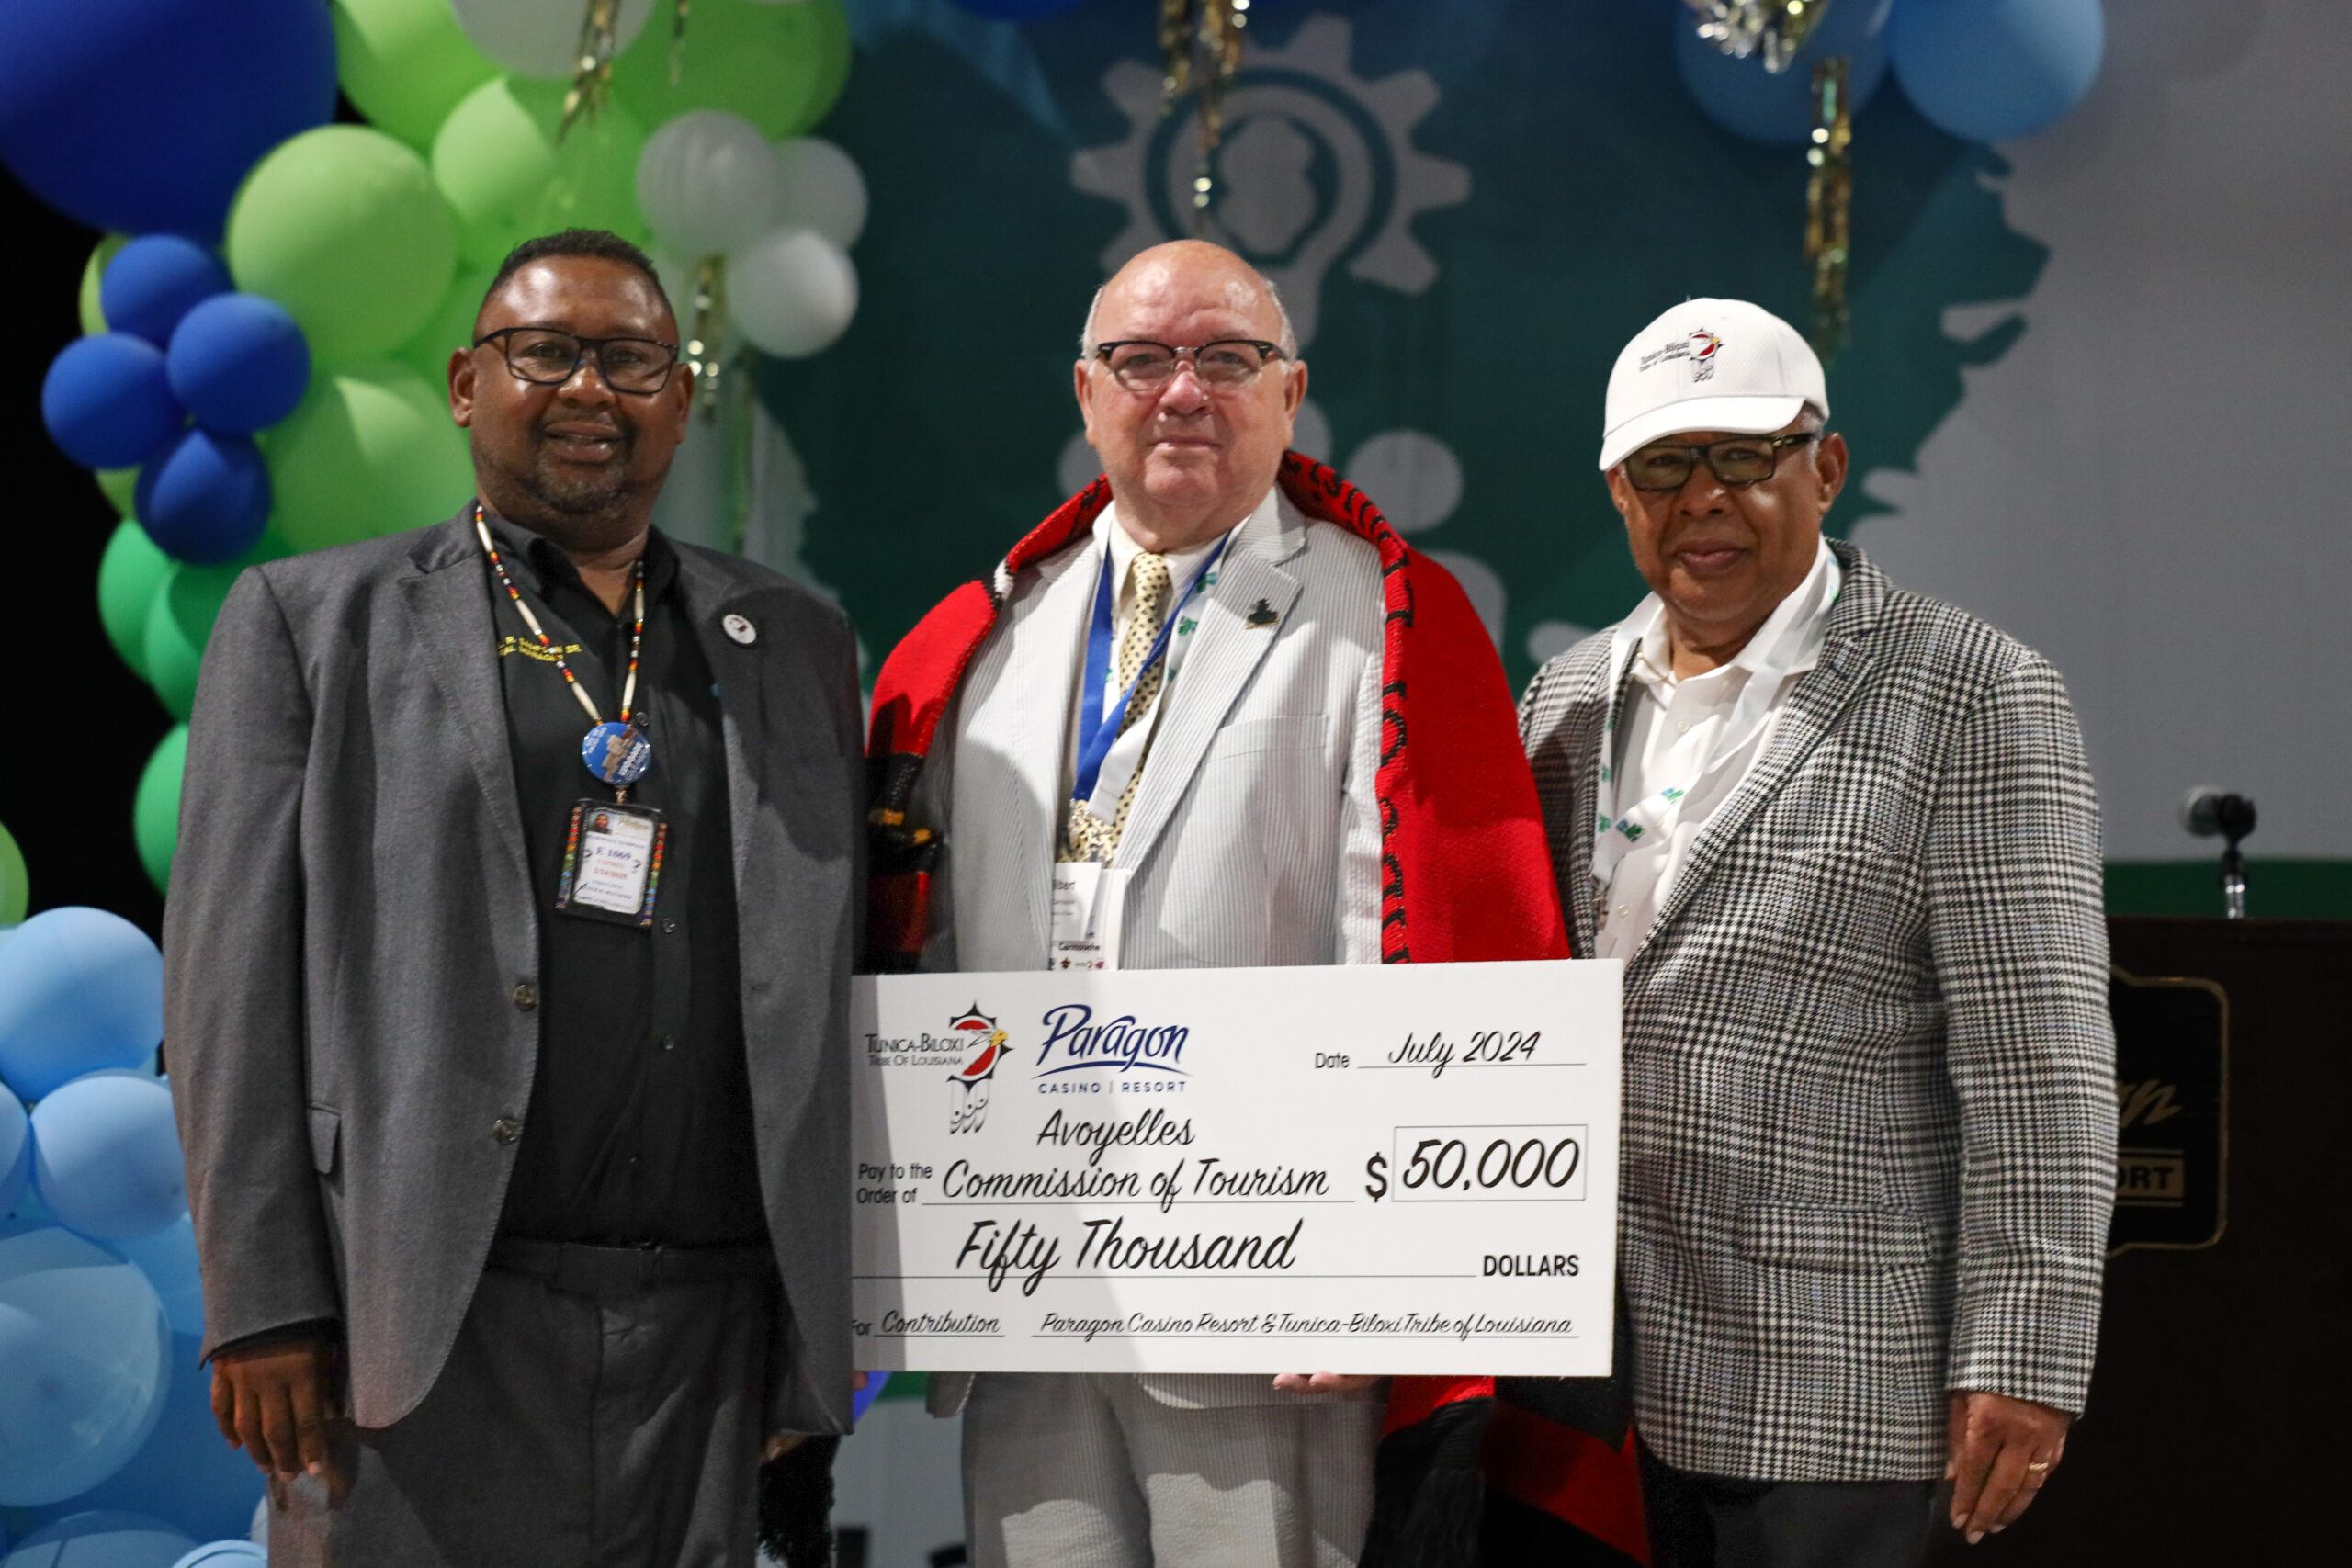 Paragon Casino Resort and Tunica-Biloxi Tribe Donate $50,000 to Avoyelles Commission of Tourism